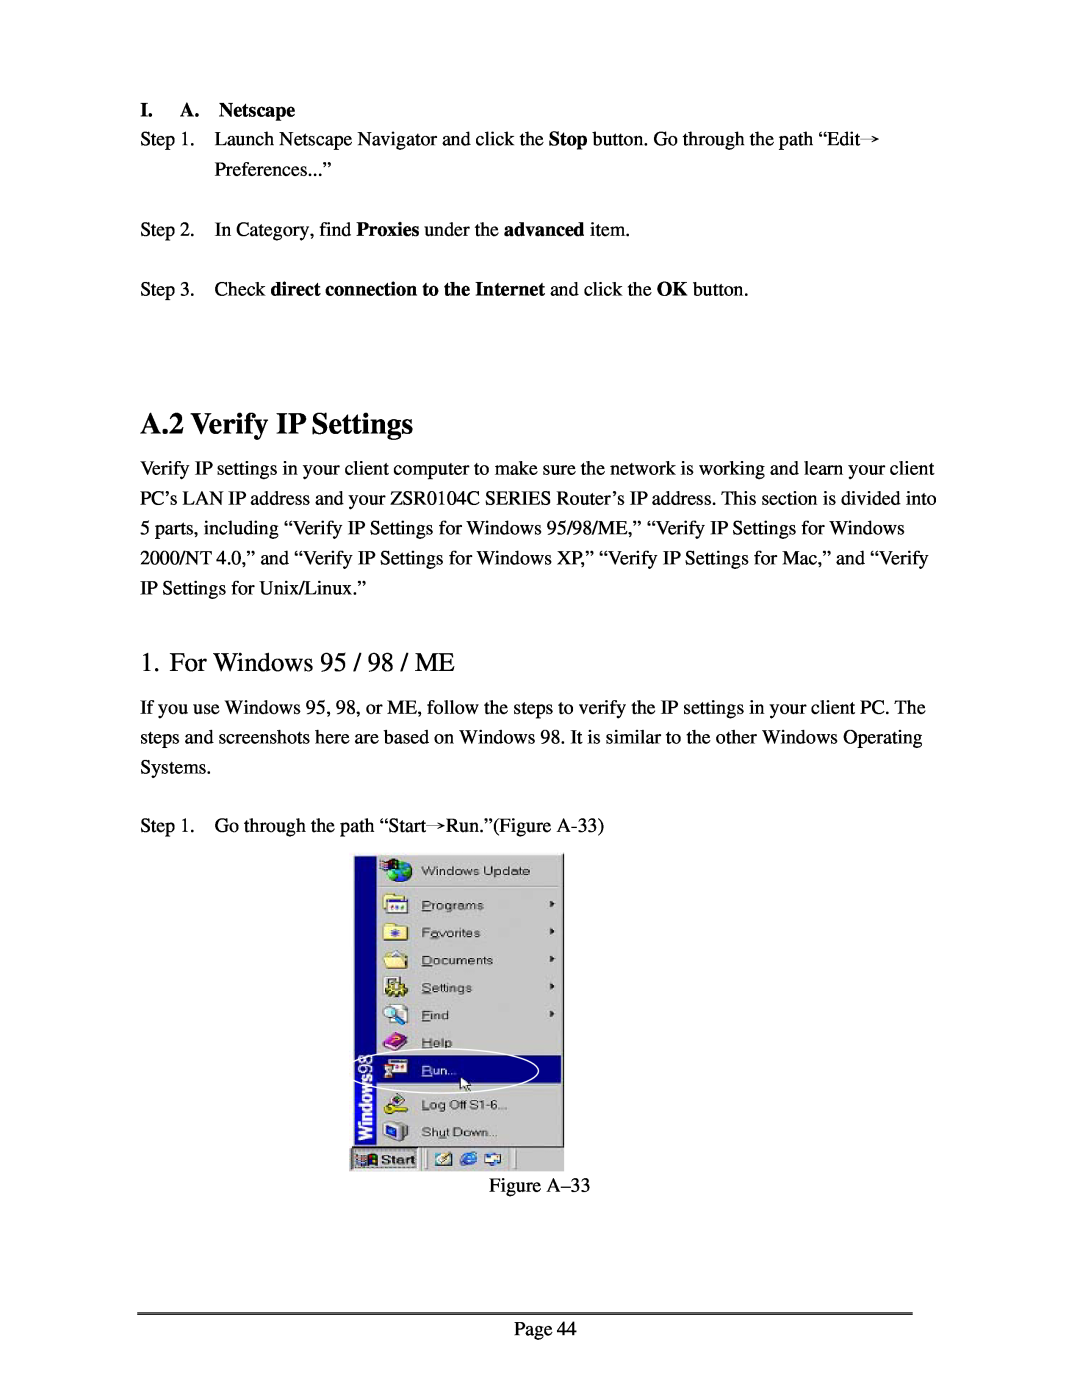 Zonet Technology ZSR0104C Series user manual A.2 Verify IP Settings, For Windows 95 / 98 / ME, I. A. Netscape 